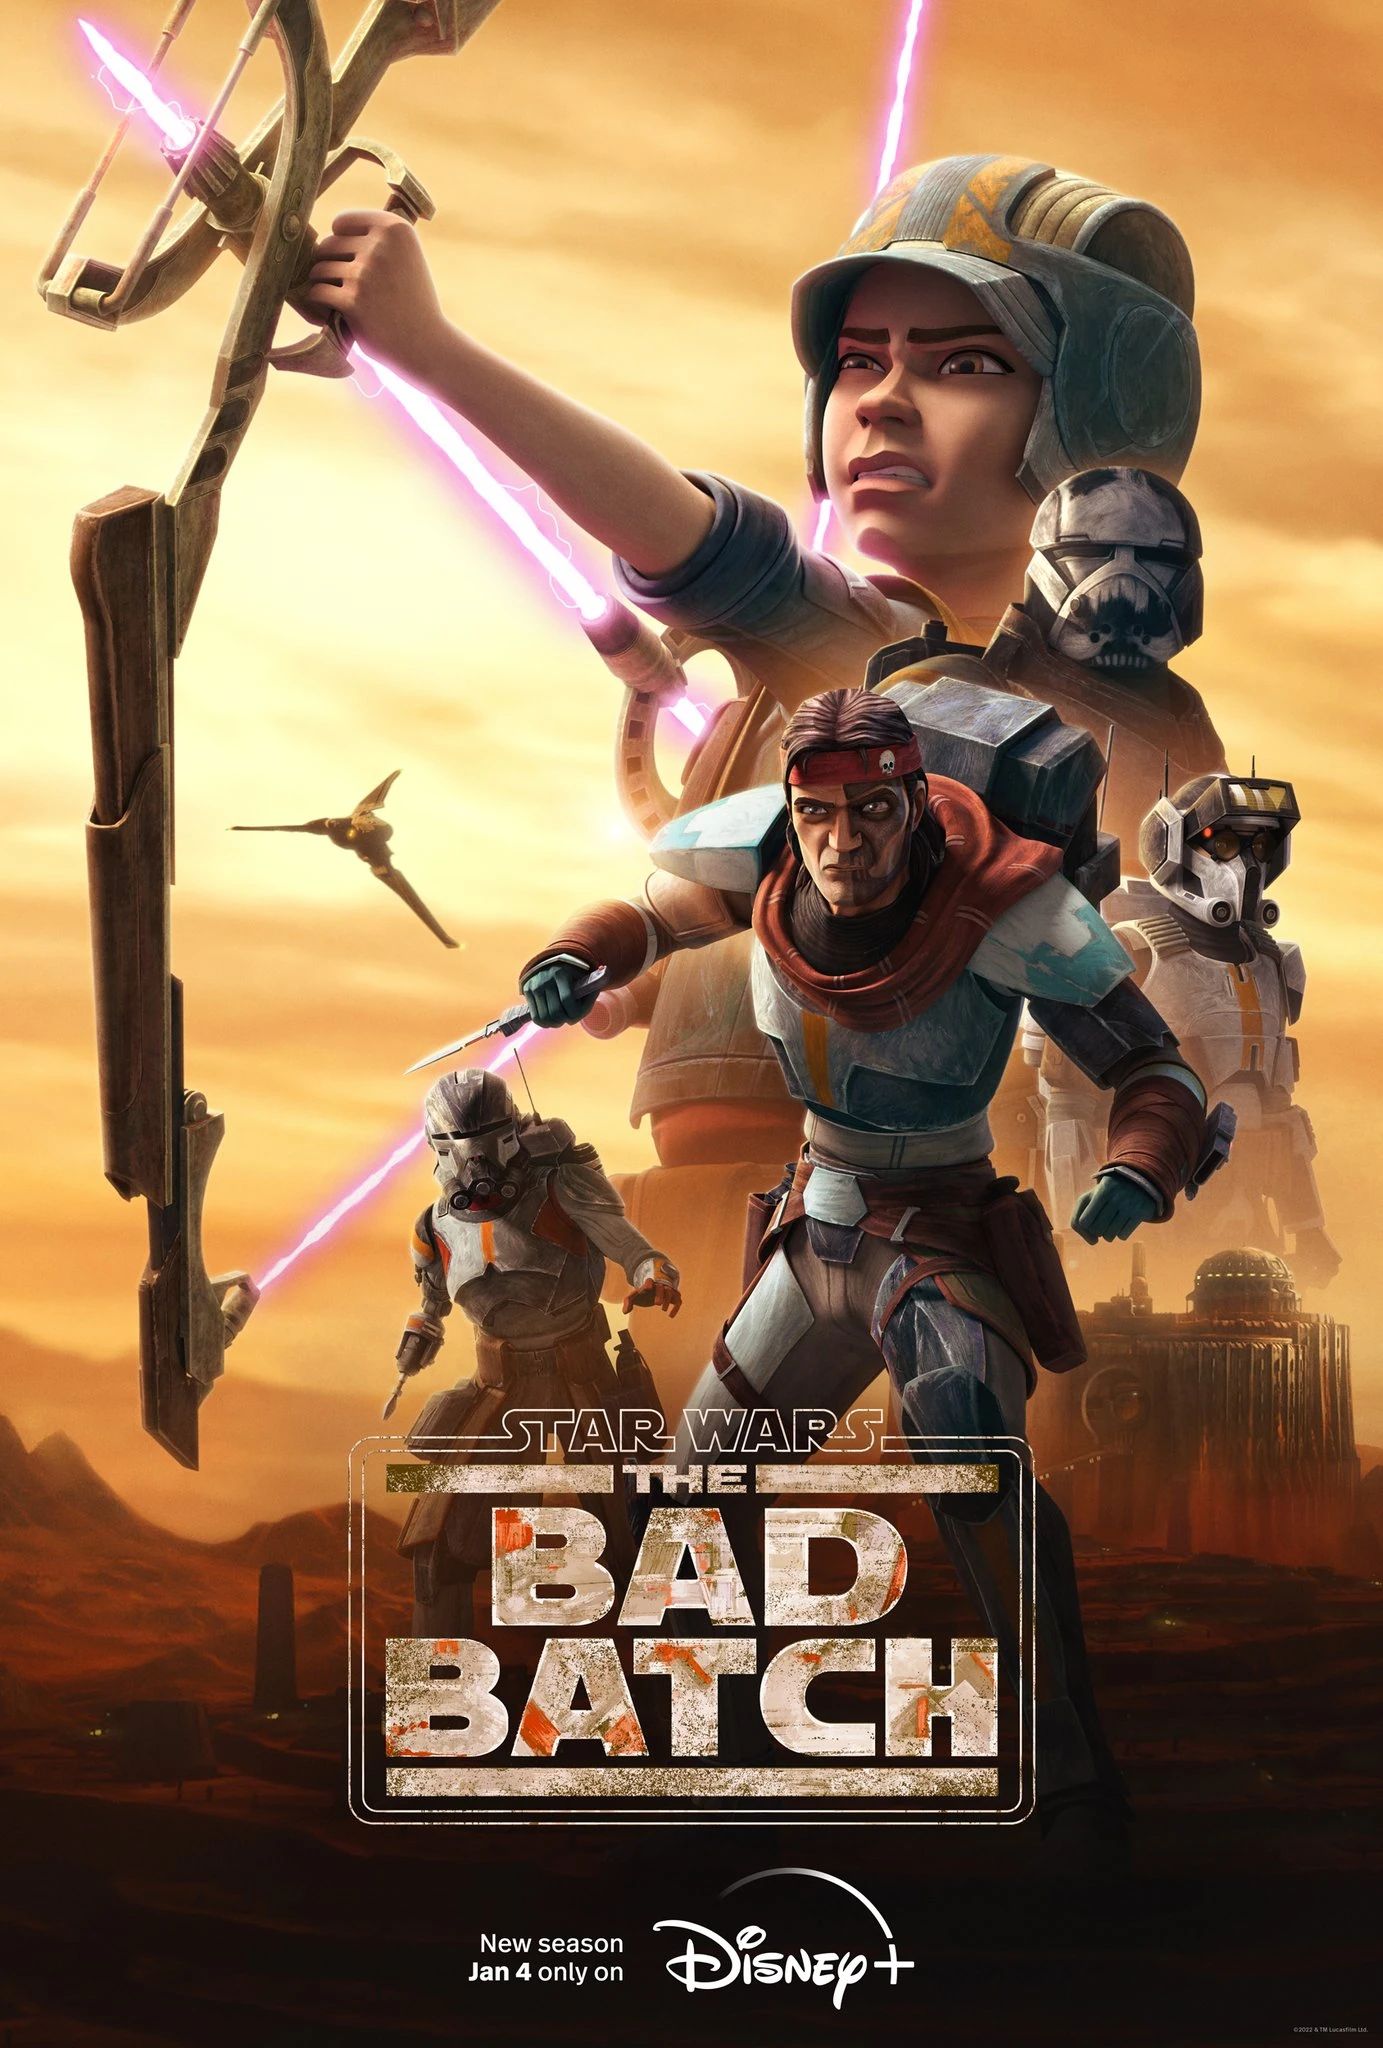 Star Wars: The Bad Batch 2x01 Spoils of War premier